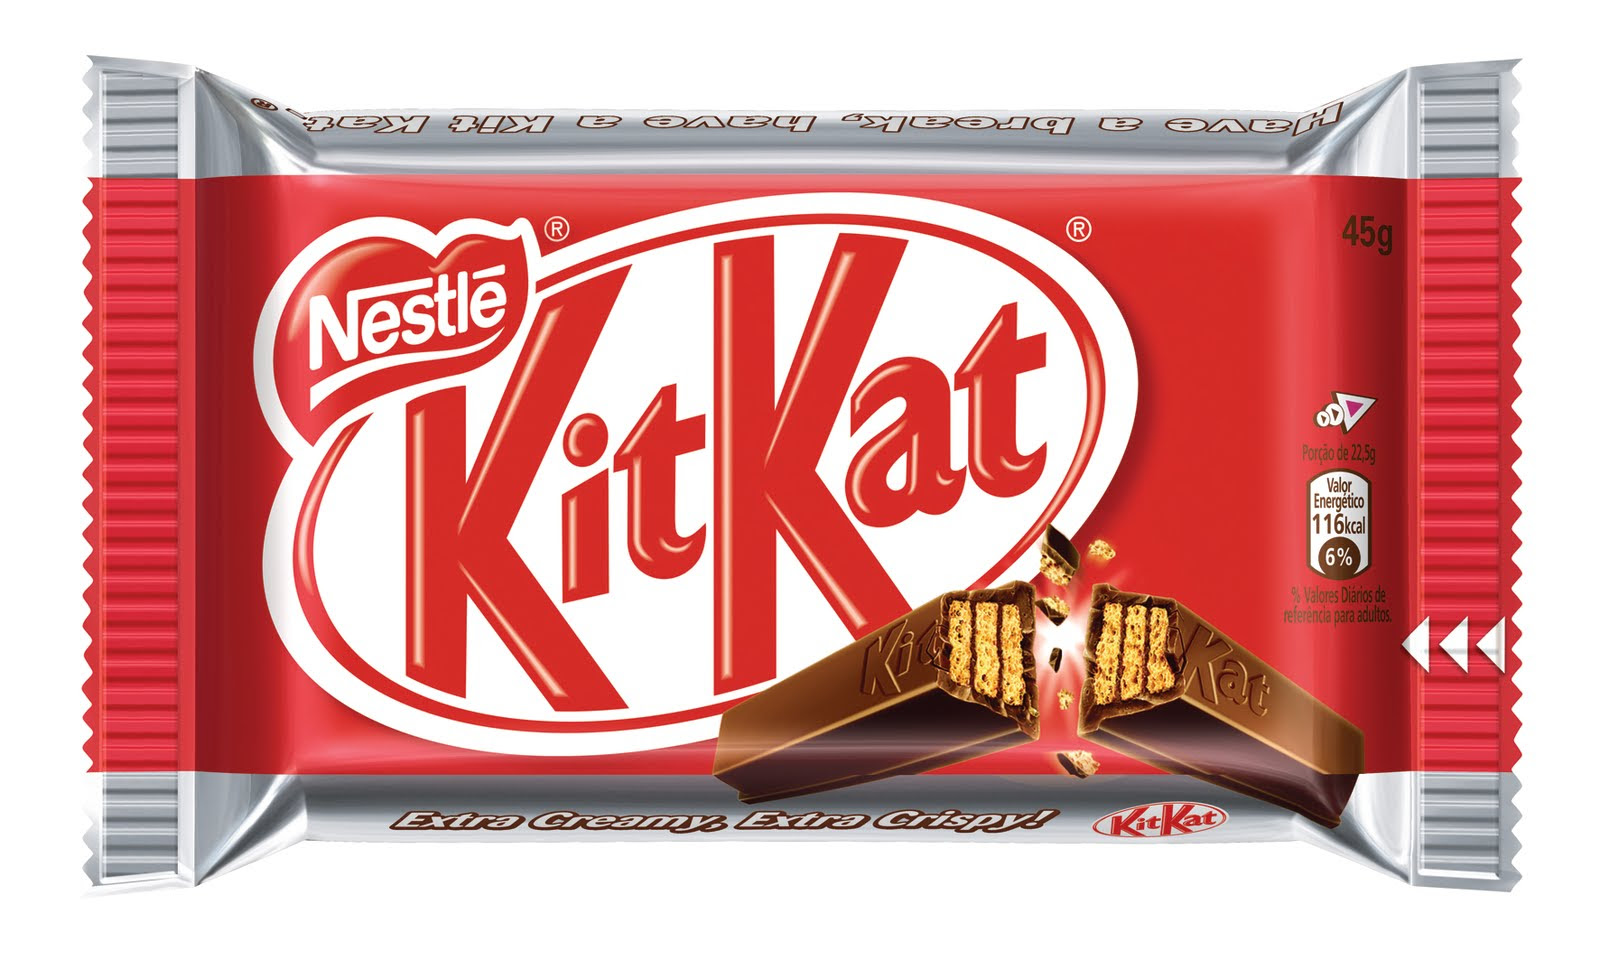 Аналог китката. Нестле КИТКАТ. Kit kat 41g. Kitkat упаковка. Kitkat логотип.